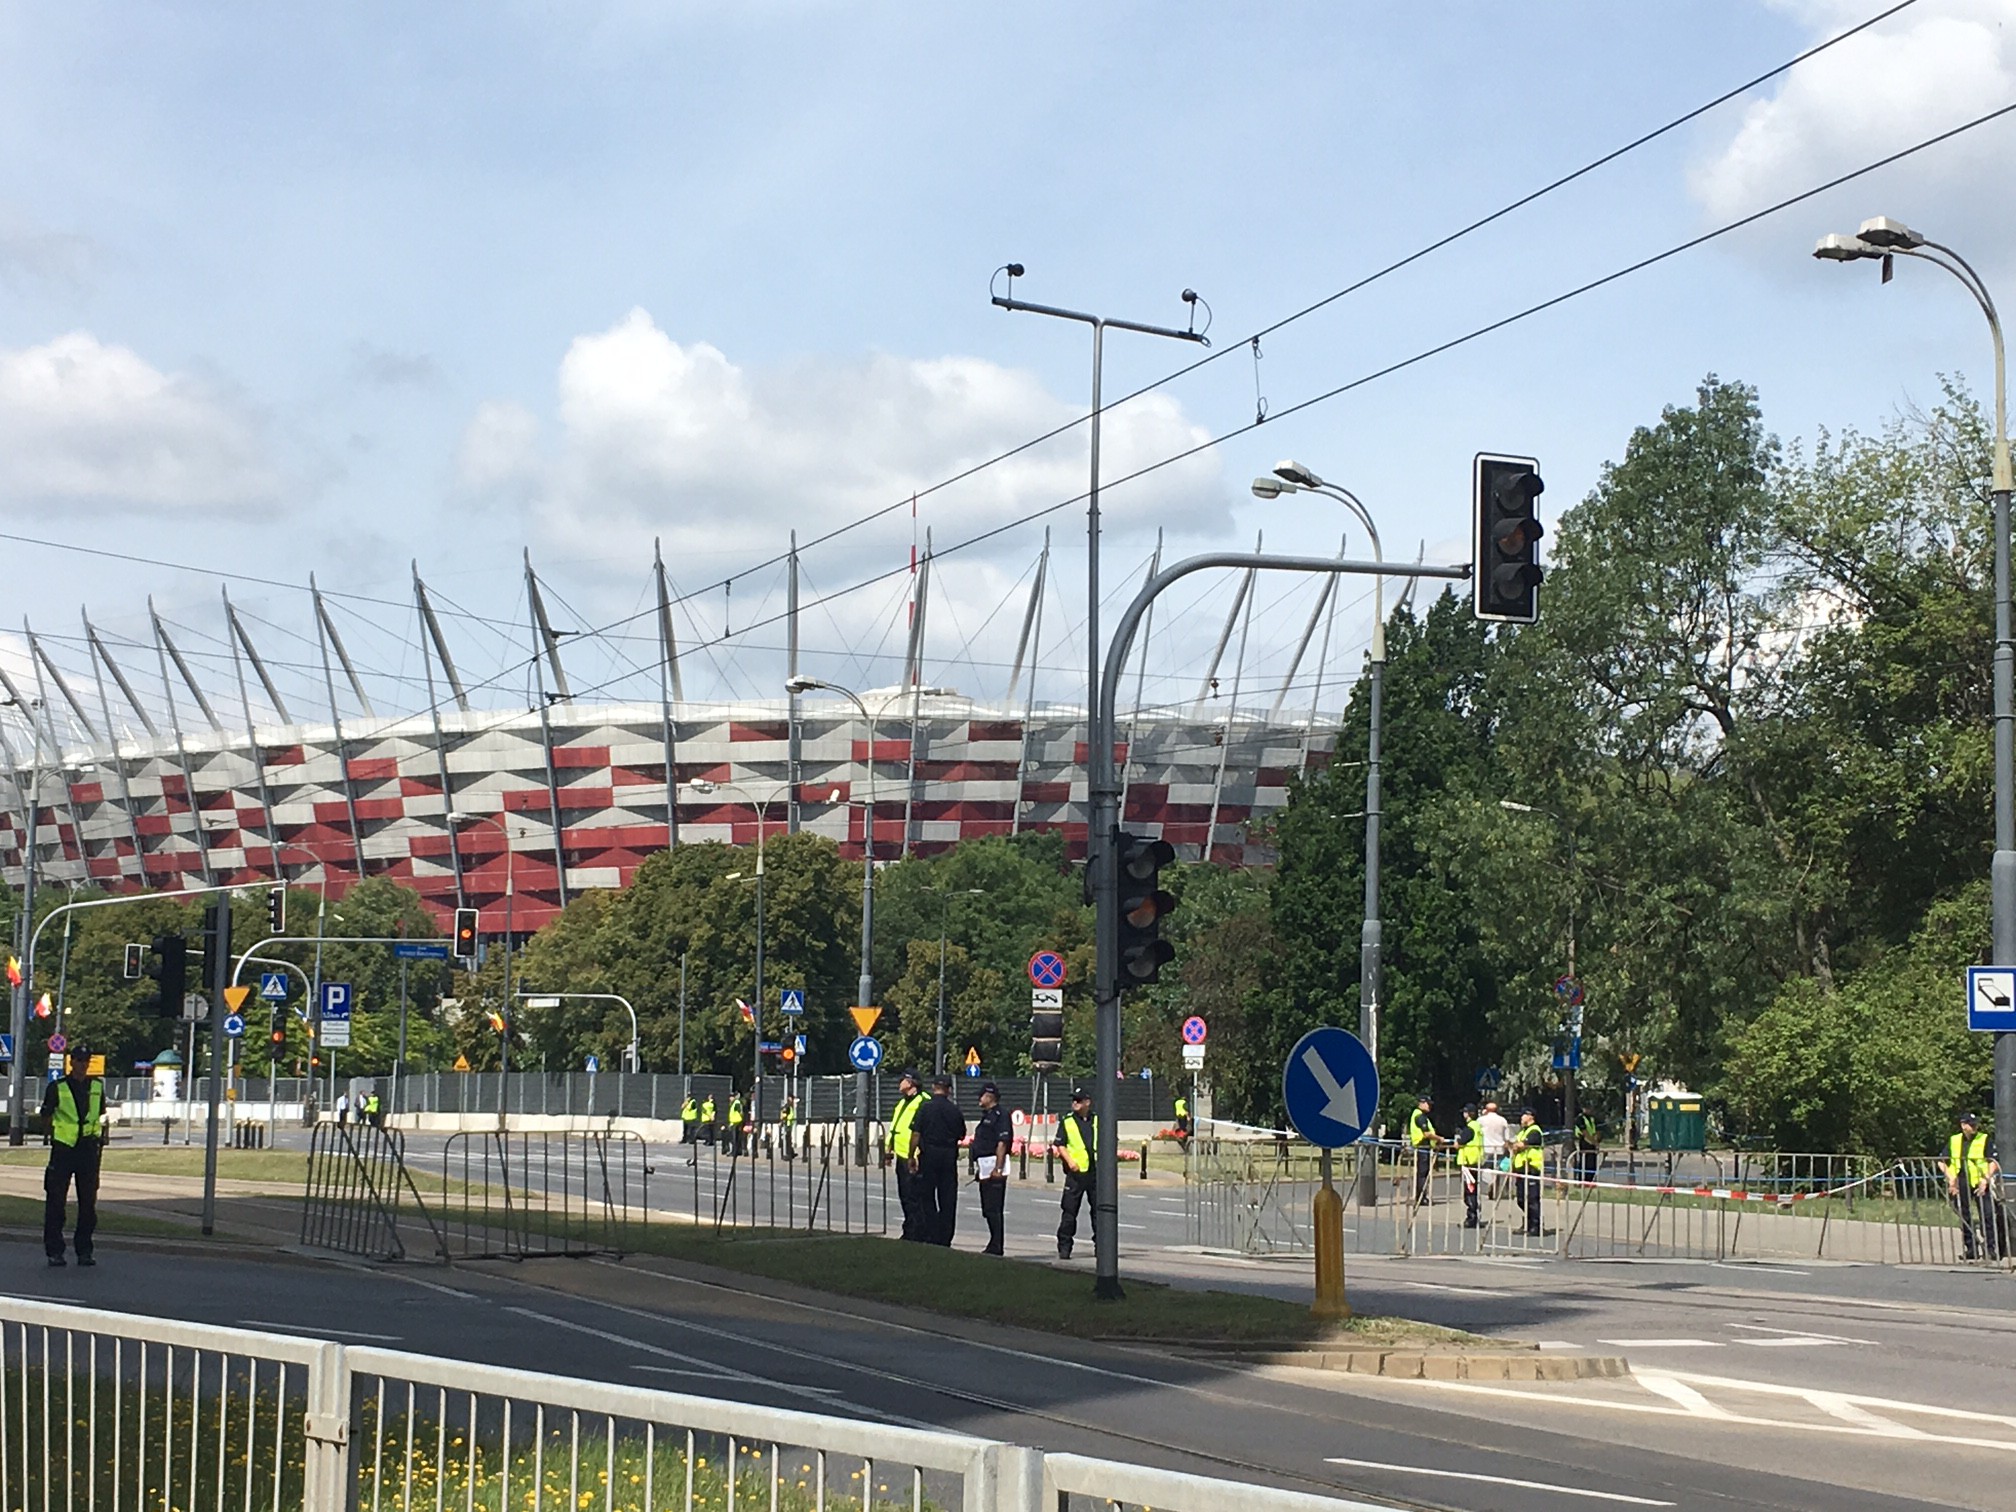 Stadion Narodowy, hvor NATO holder topmøde. Foto: Uffe Gardel /Mr. East